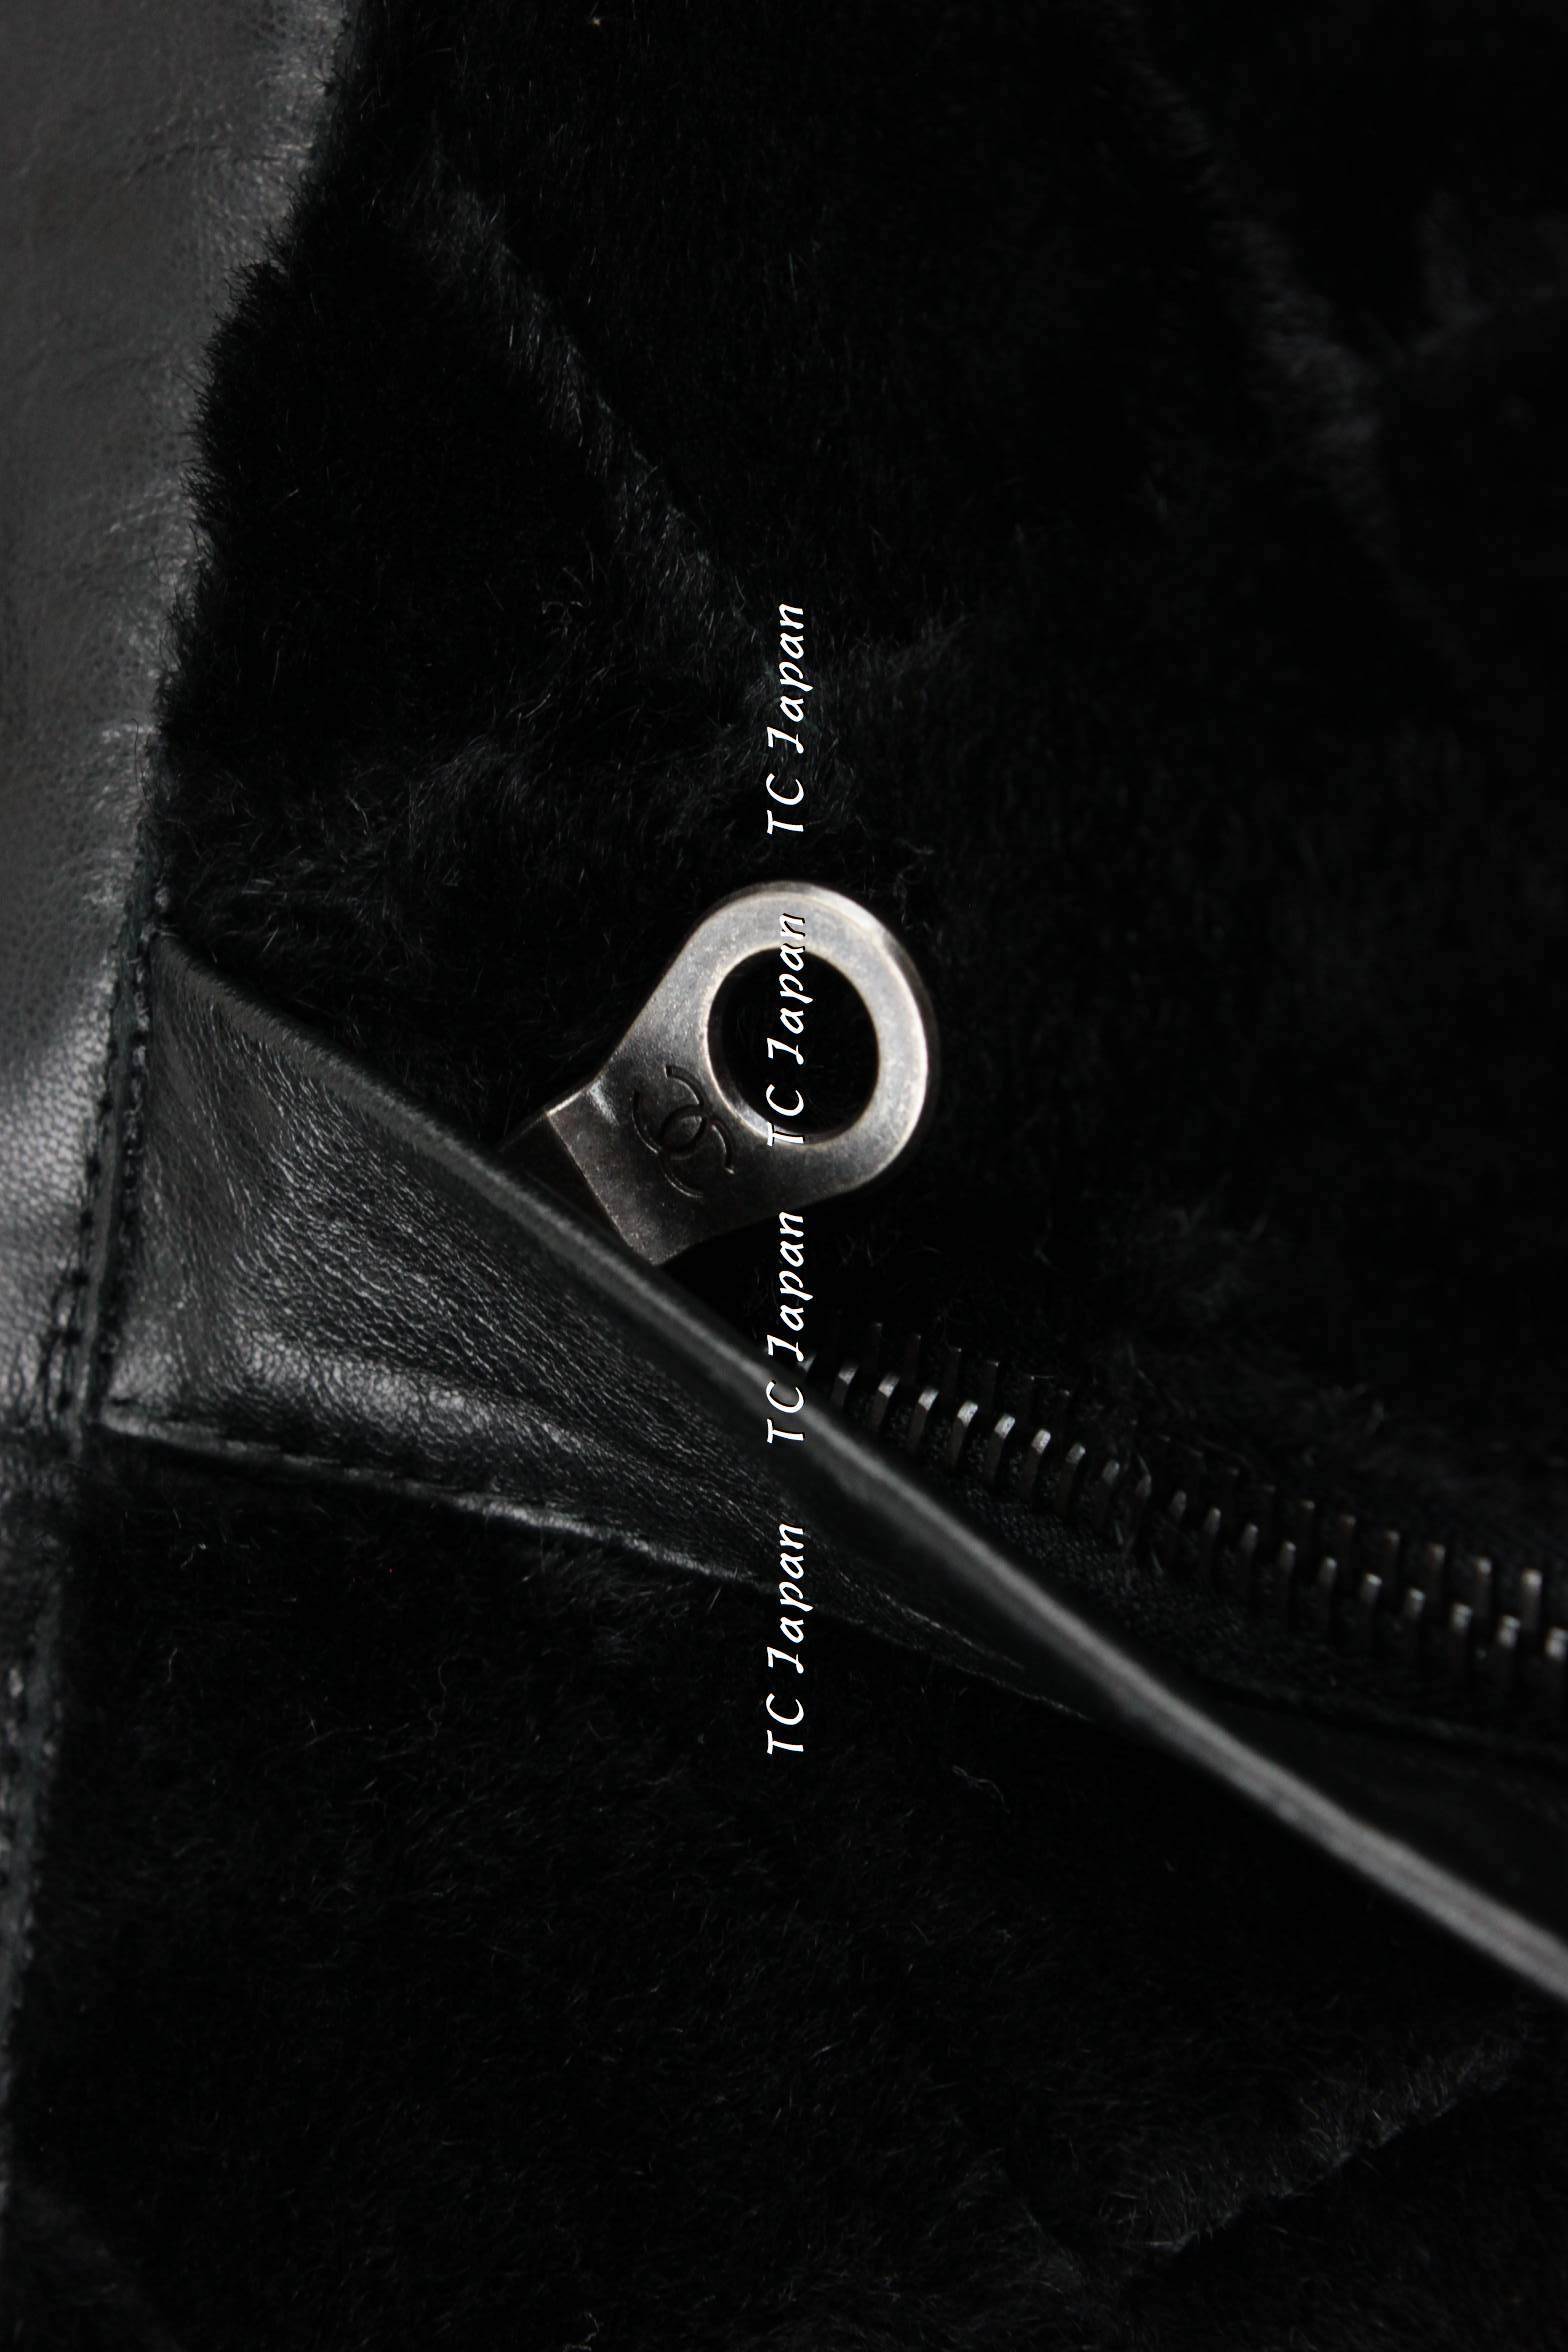 CHANEL 10A Black Leather Coat 40 シャネル ラムスキン・レザー・コート・ジャケット 即発